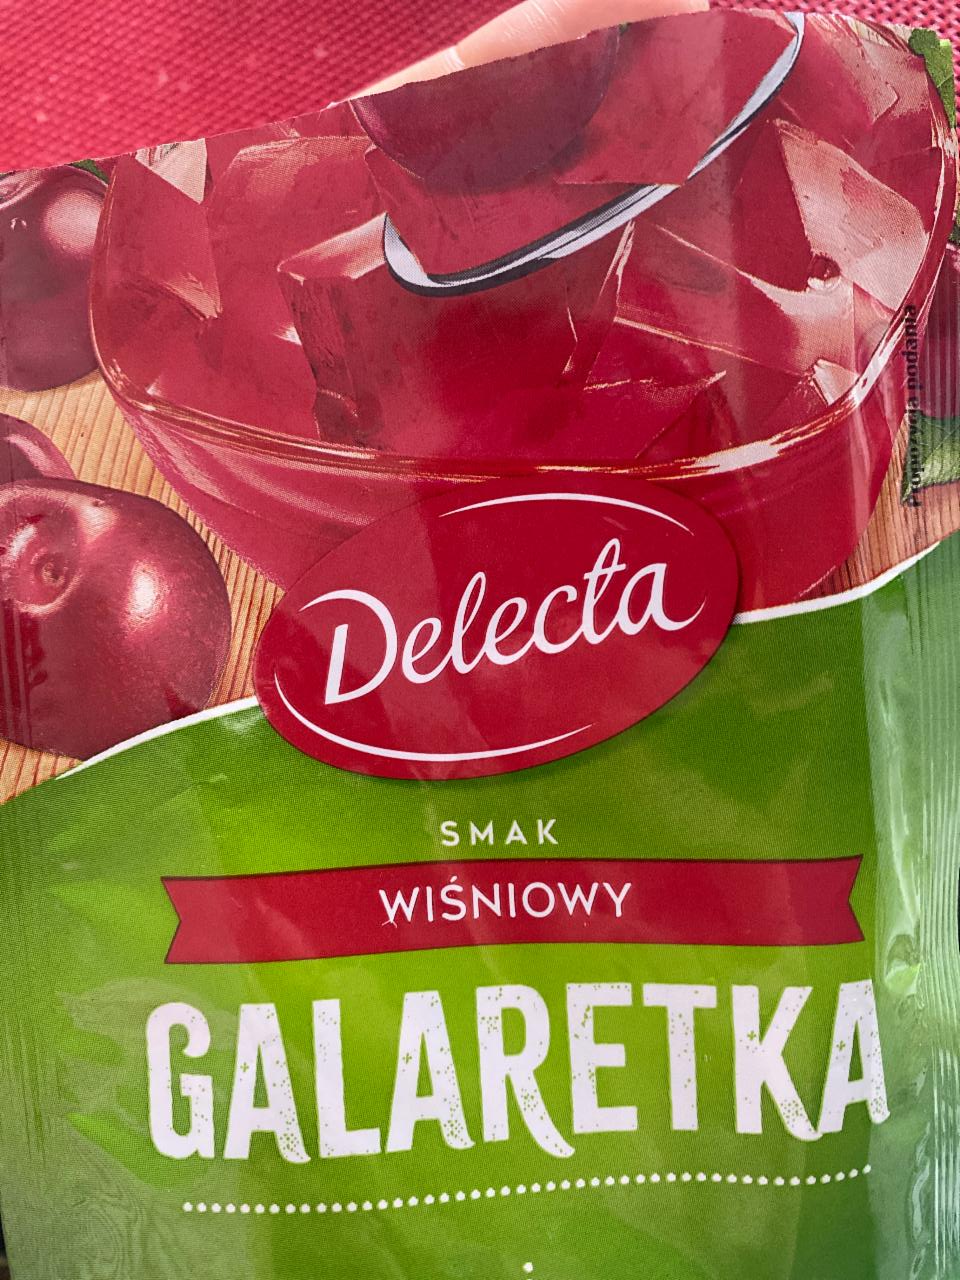 Фото - Желе с вишневым вкусом Galaretka Wisniowy Smak Delecta